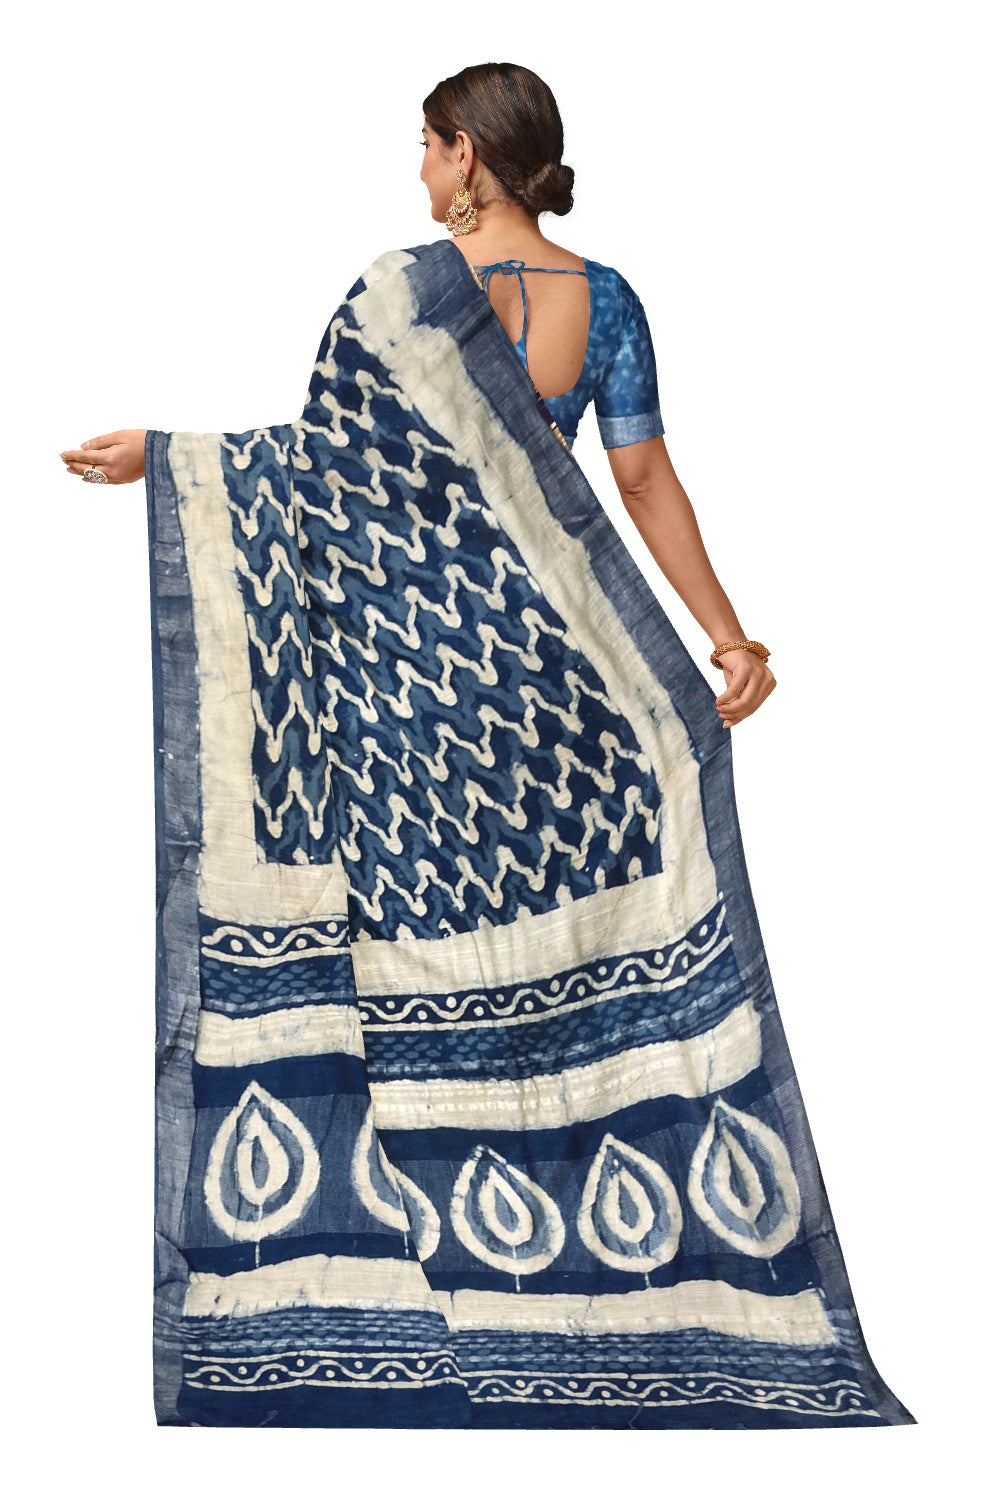 Southloom Linen Indigo Blue Saree with White Designer Prints and Tassels works on Pallu